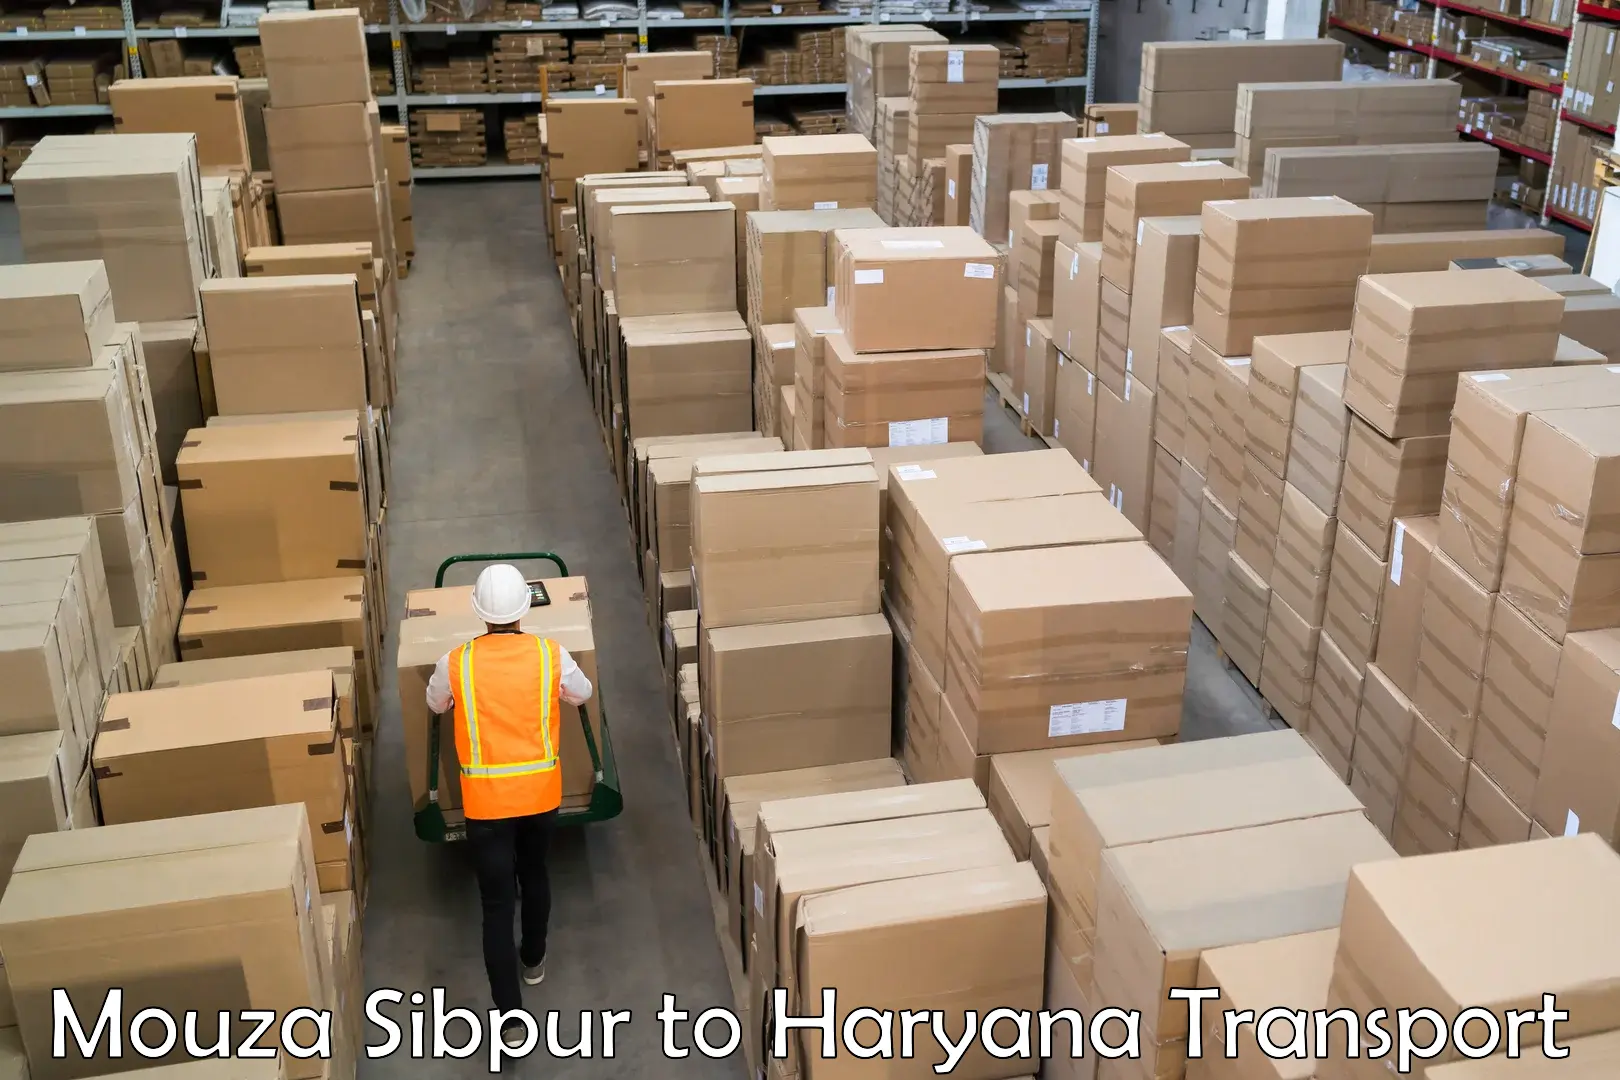 Shipping services Mouza Sibpur to Faridabad